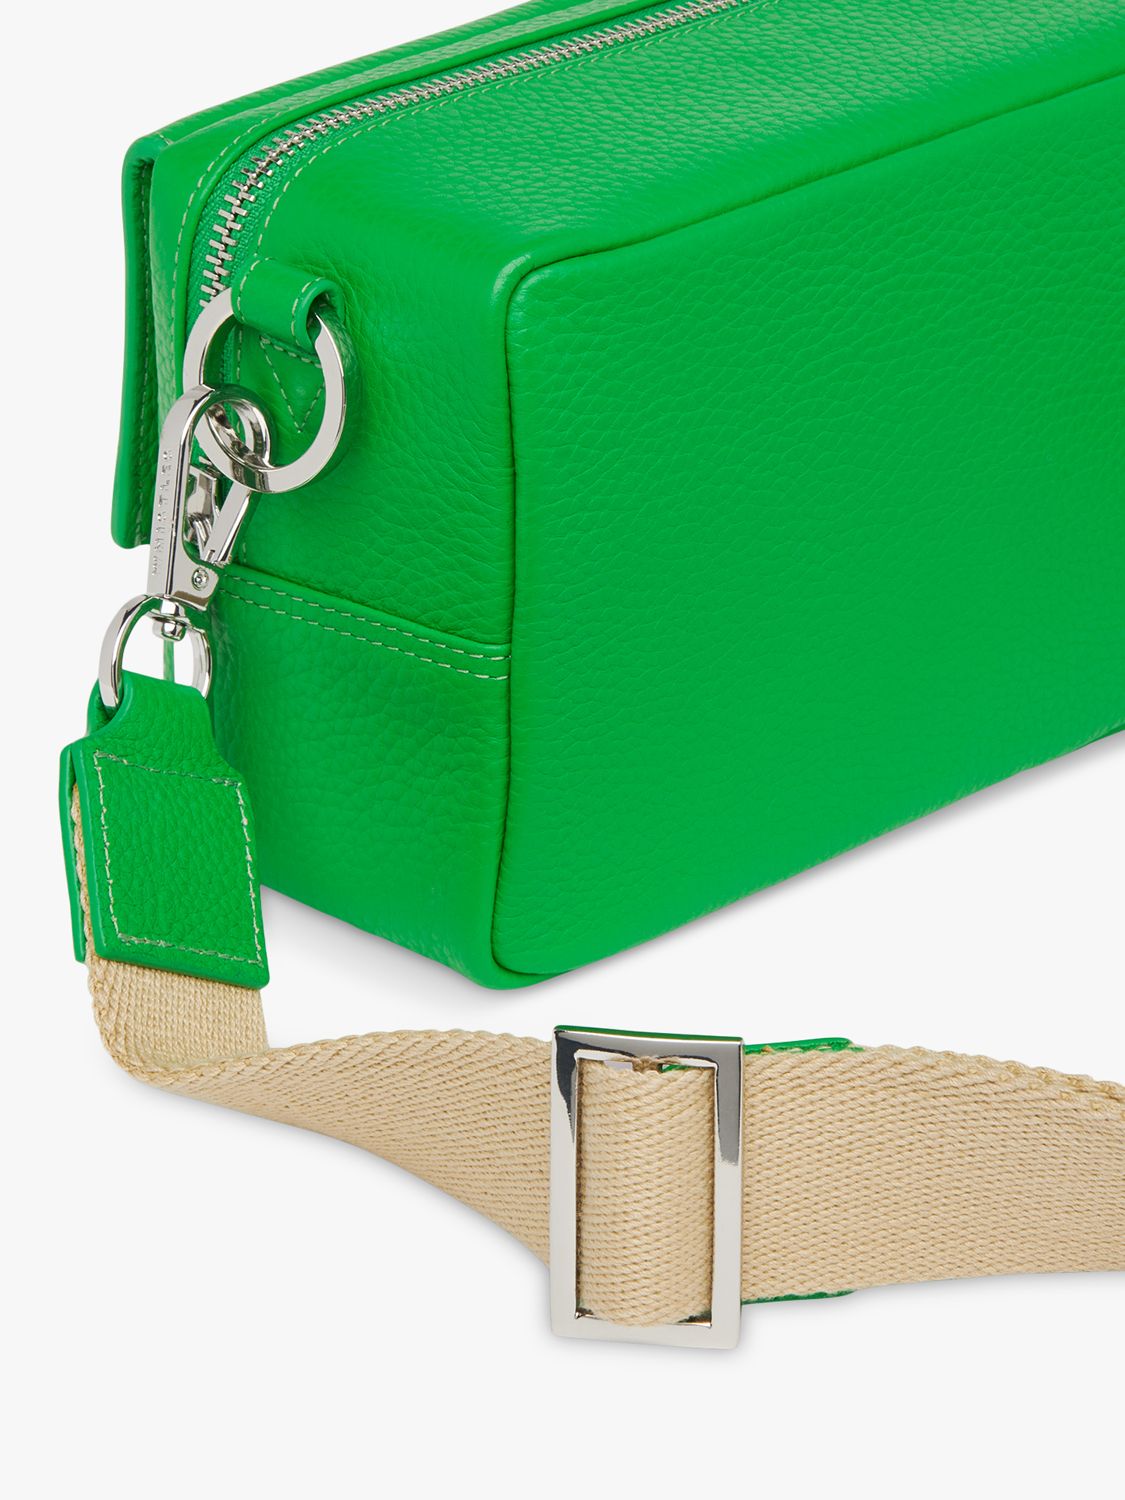 Whistles Bibi Leather Cross Body Bag, Green/Multi, One Size